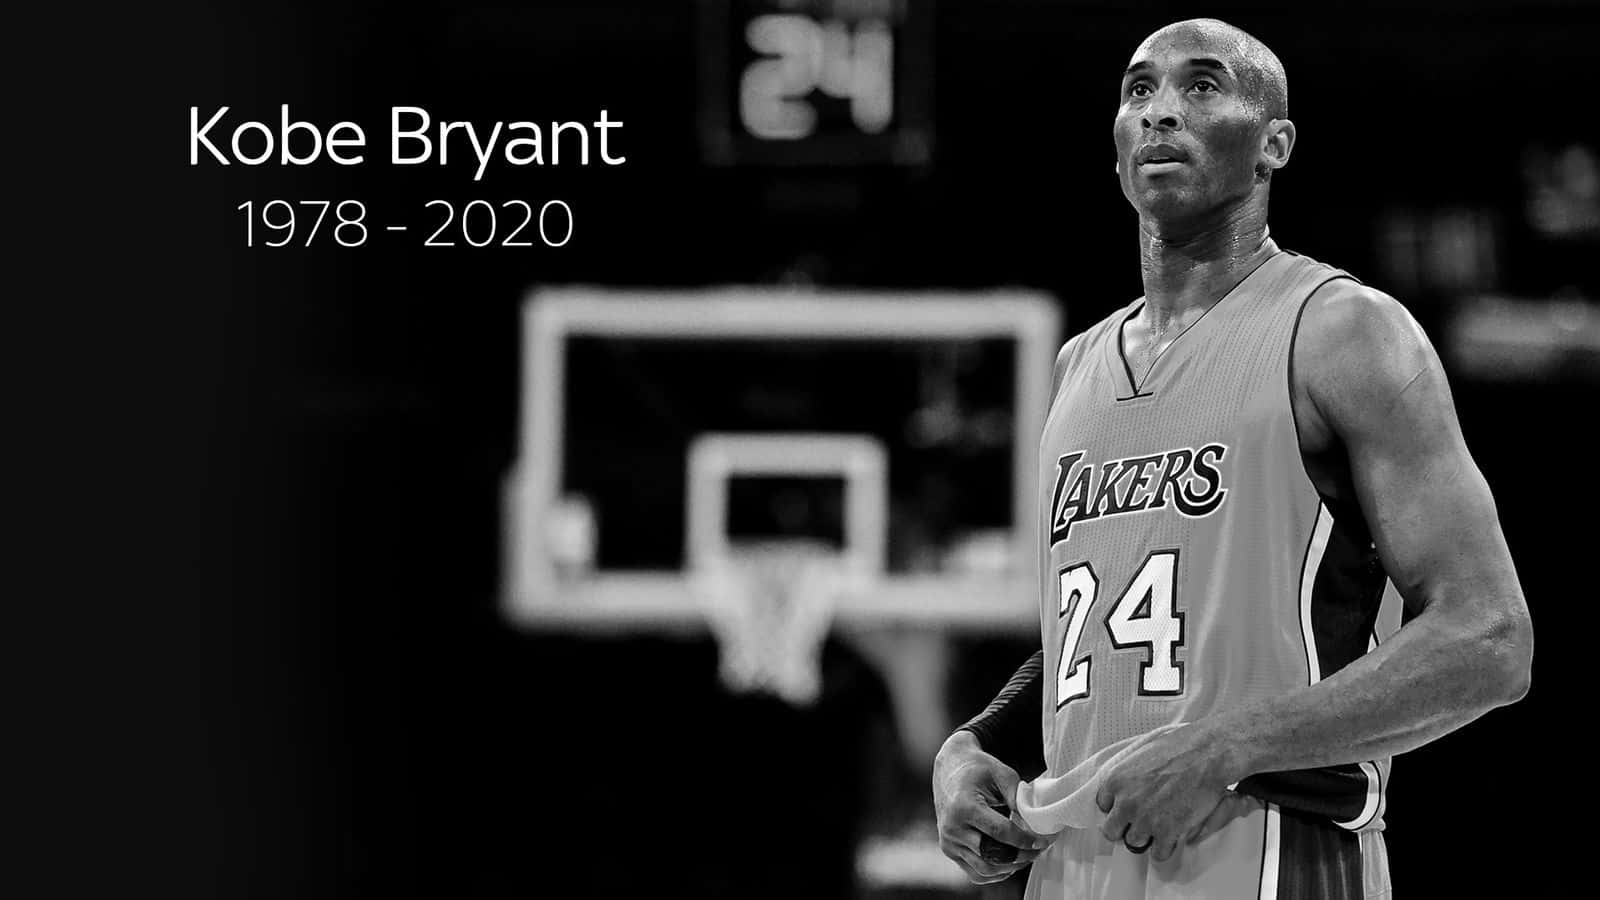 Imagensde Kobe Bryant.